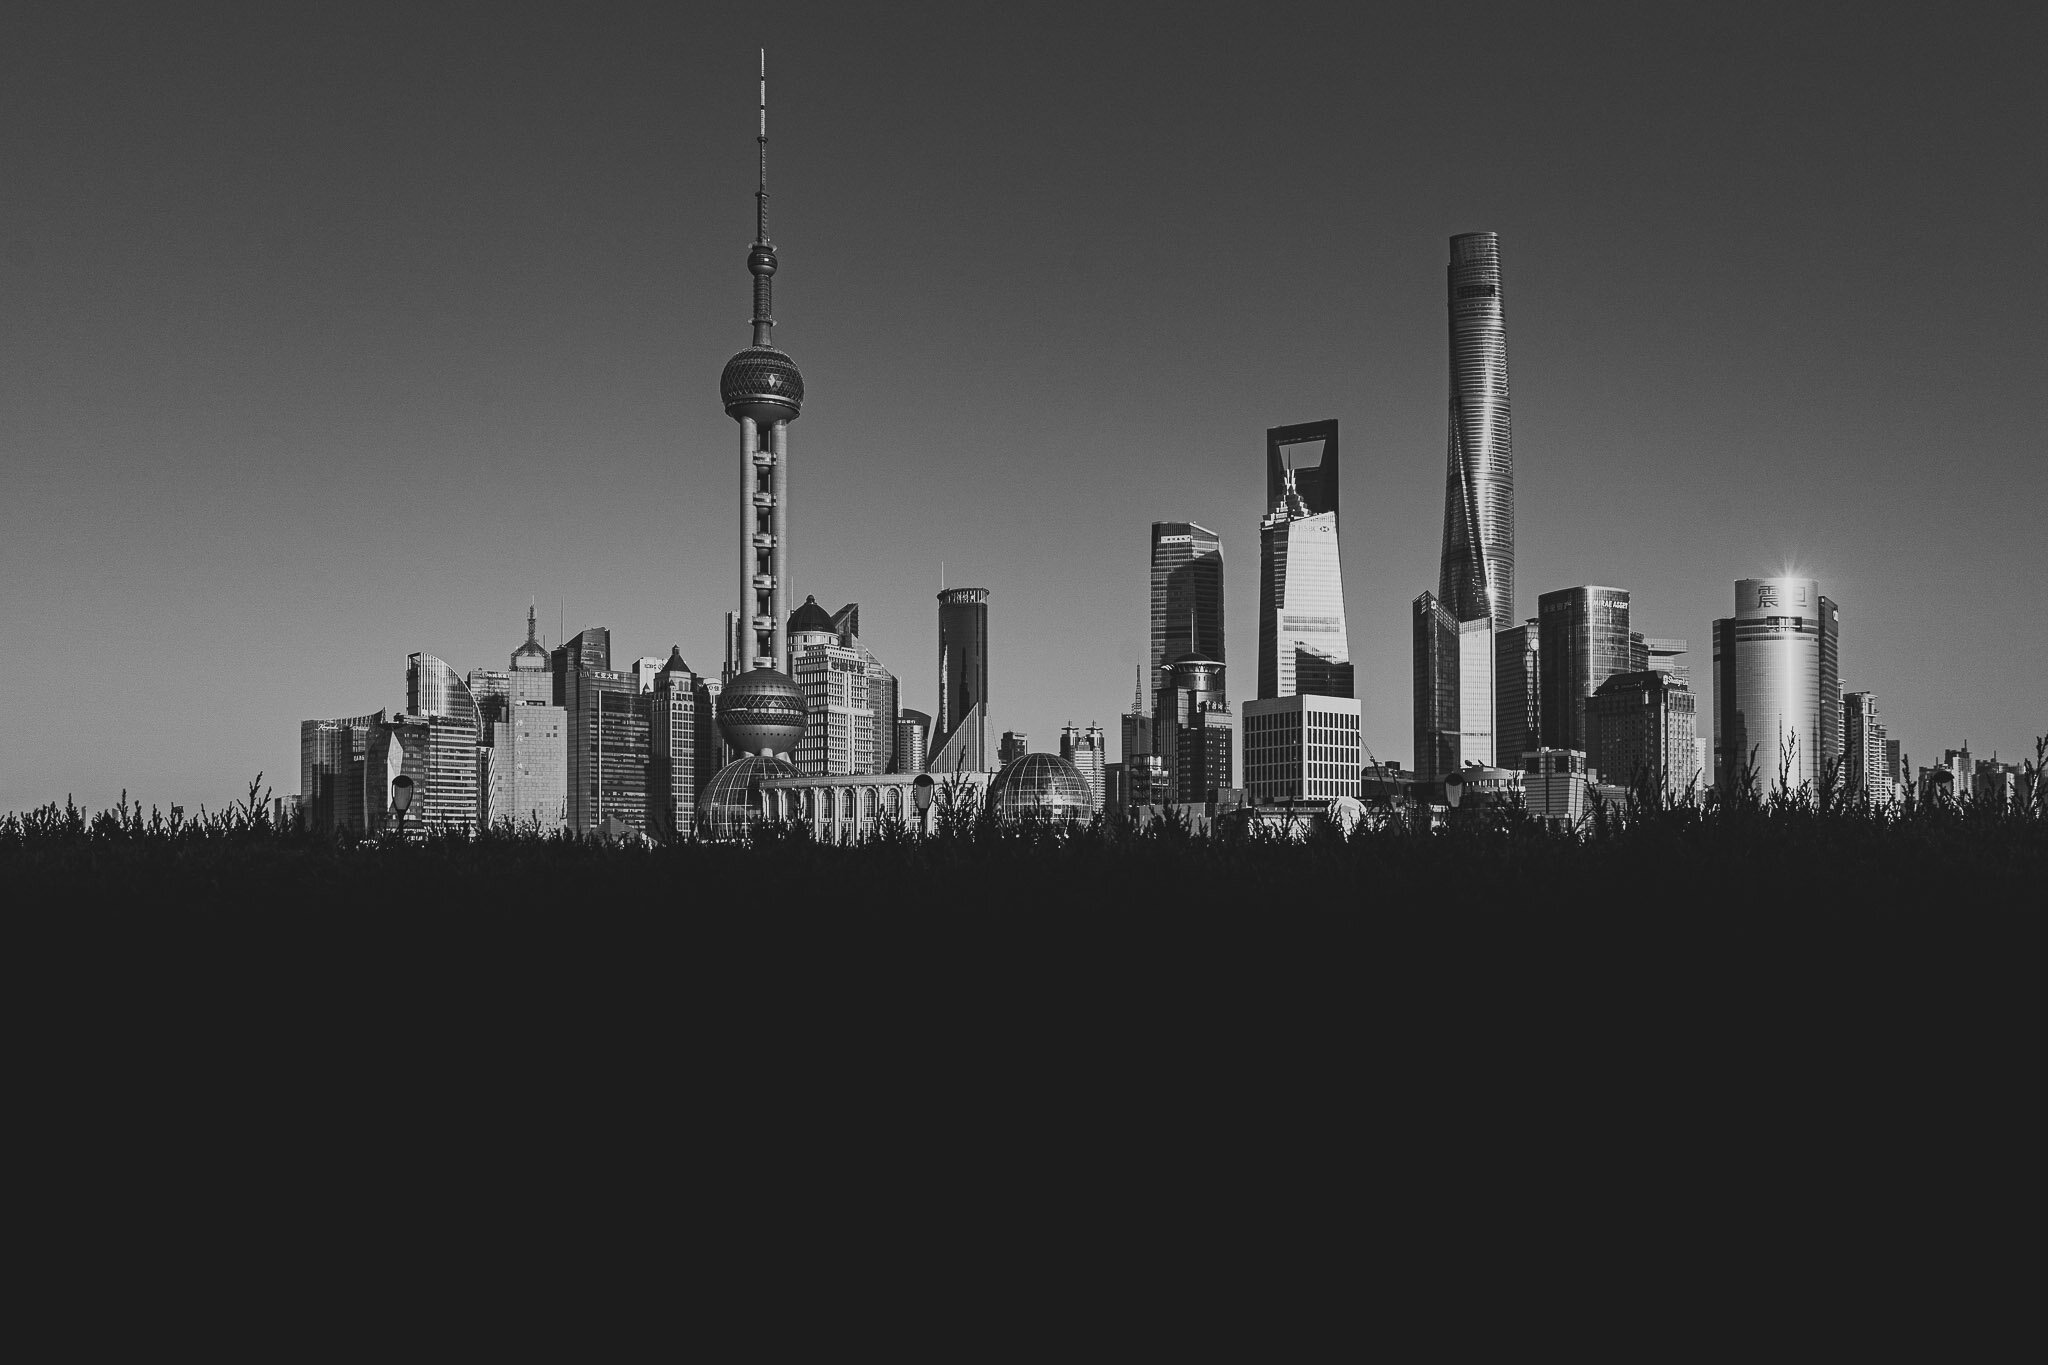 Shanghai 2020 Website31.jpg